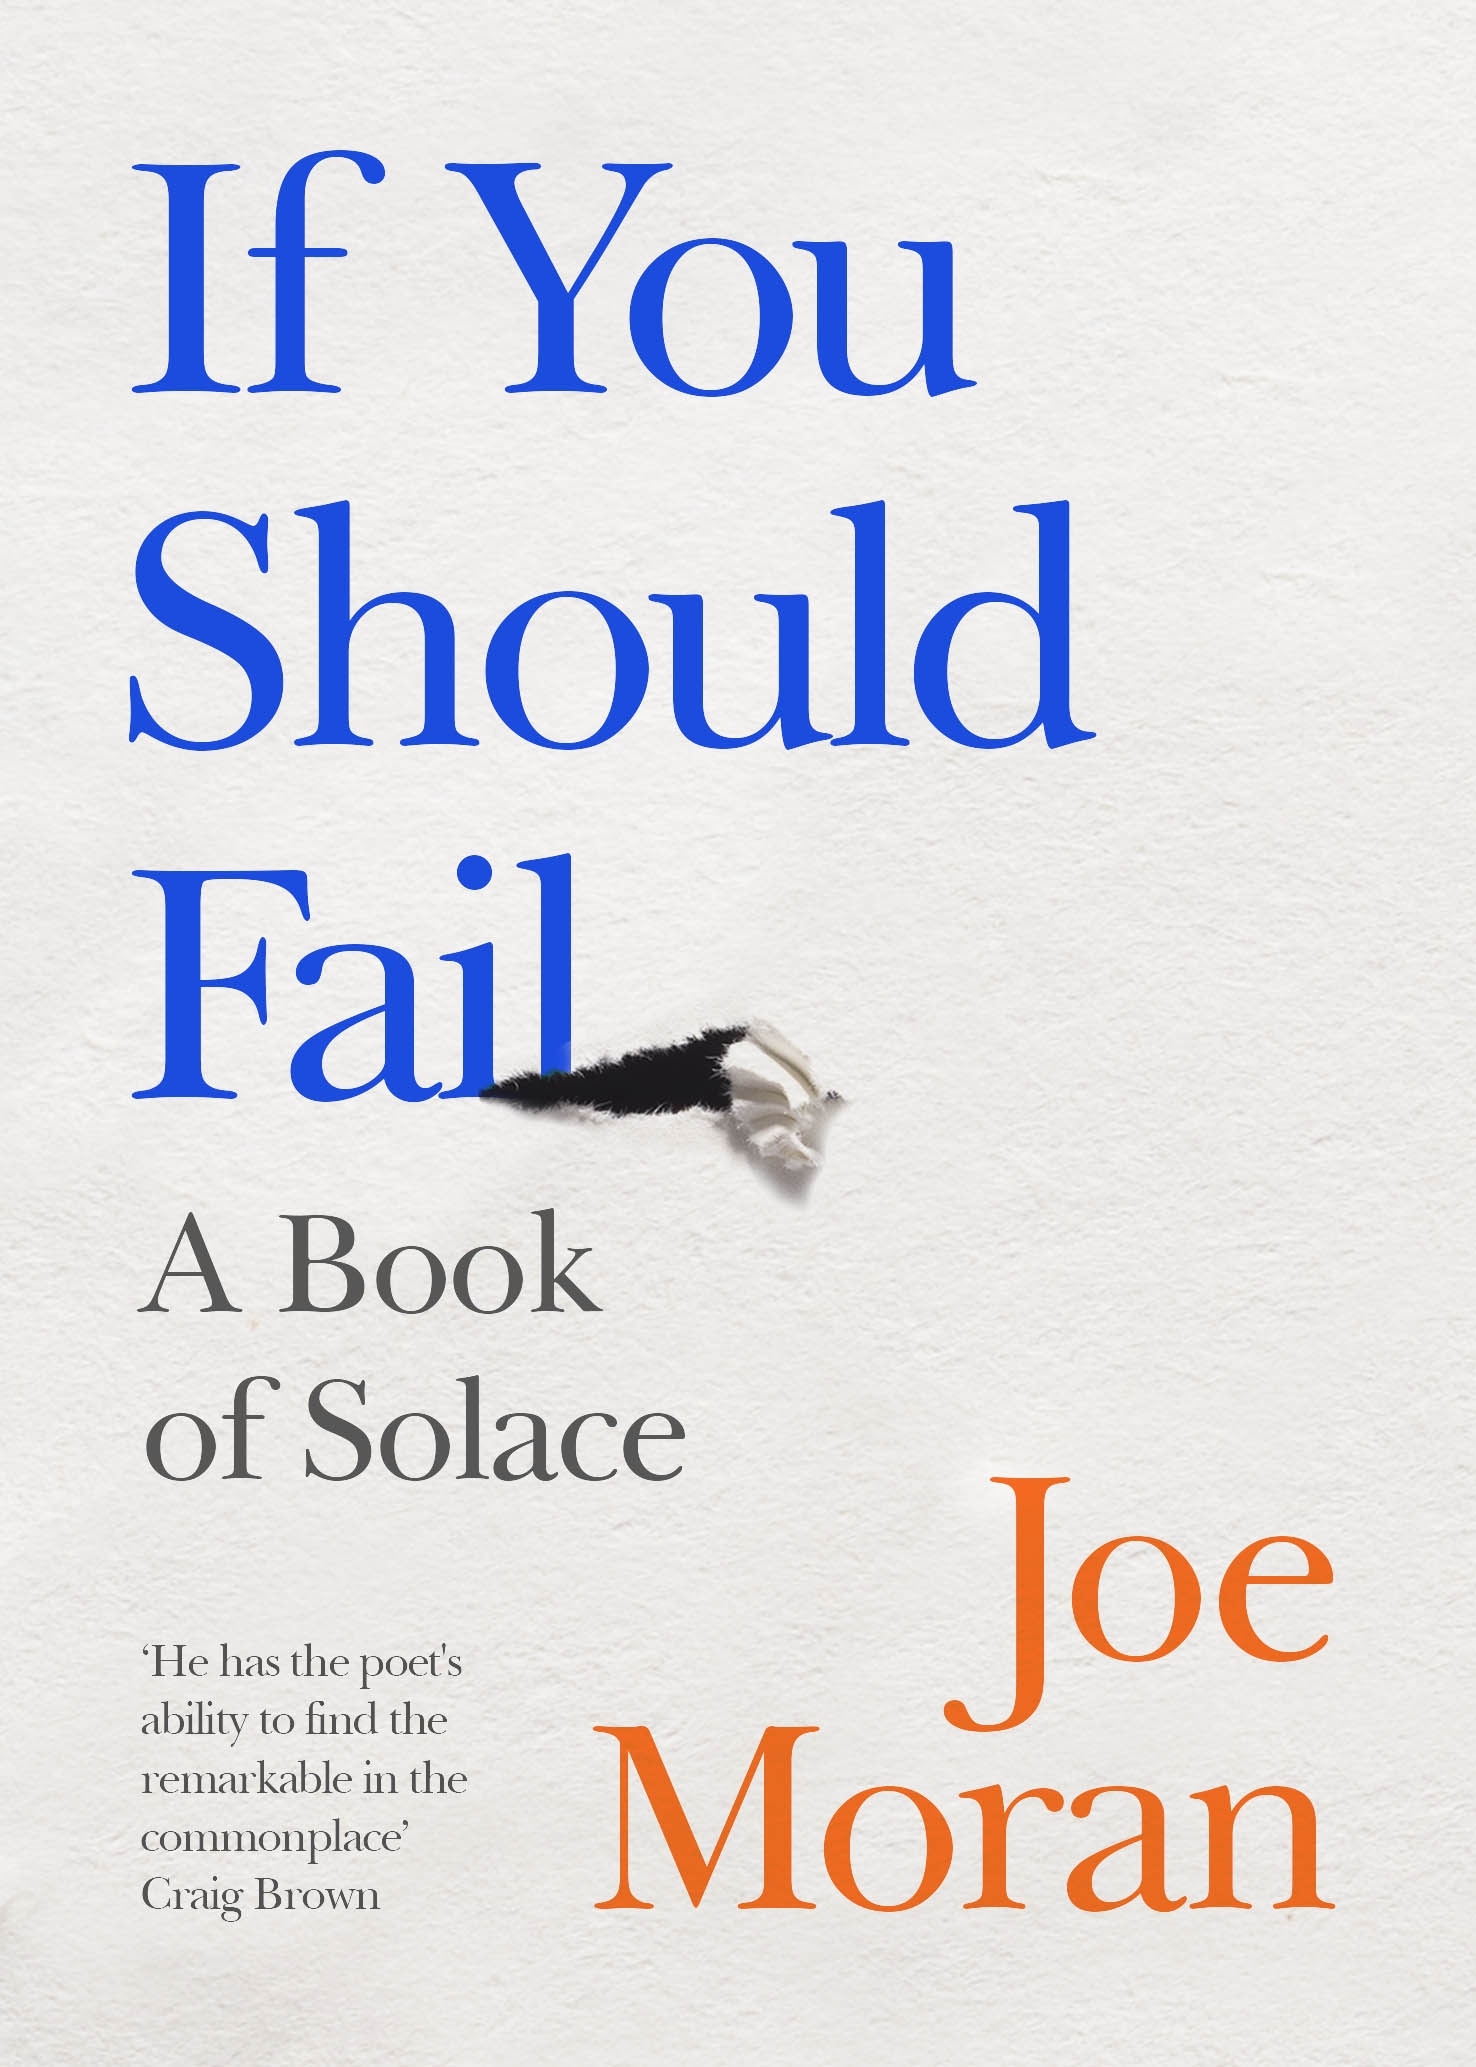 Book “If You Should Fail” by Joe Moran — September 24, 2020